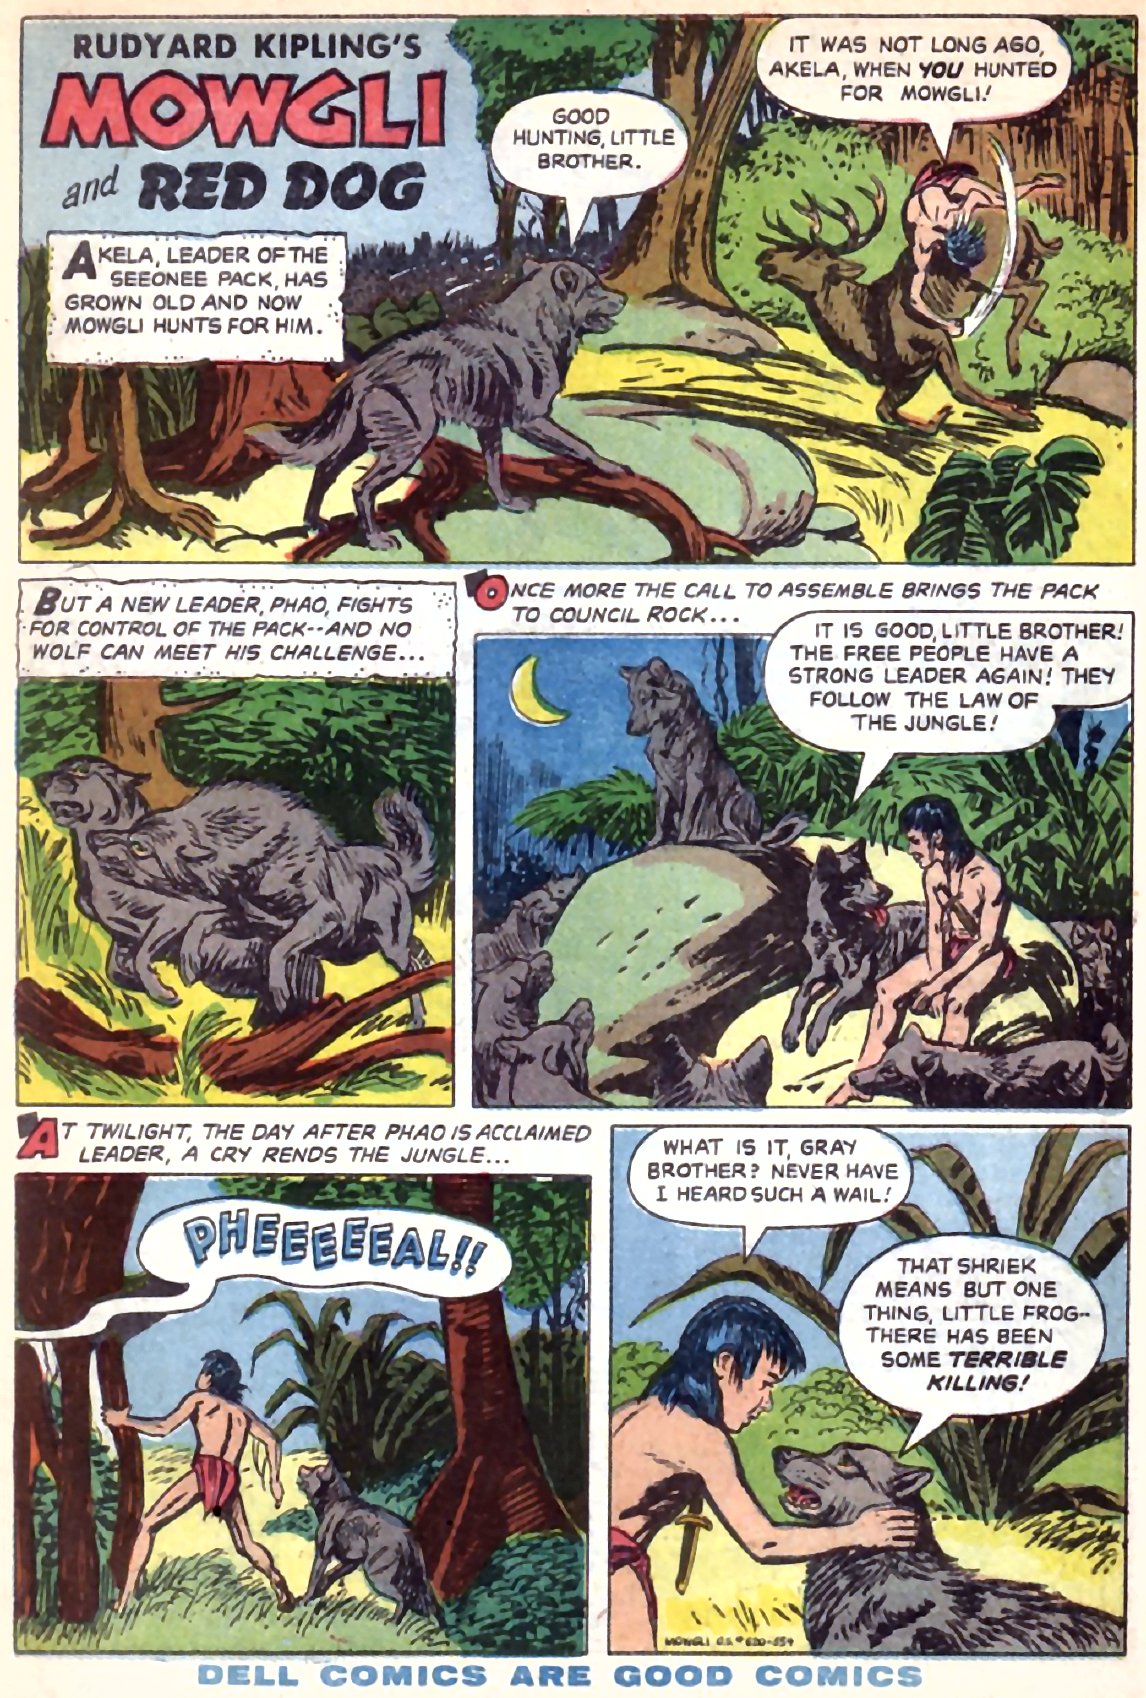 Rudyard Kipling's Mowgli: Jungle Book #3 page 1